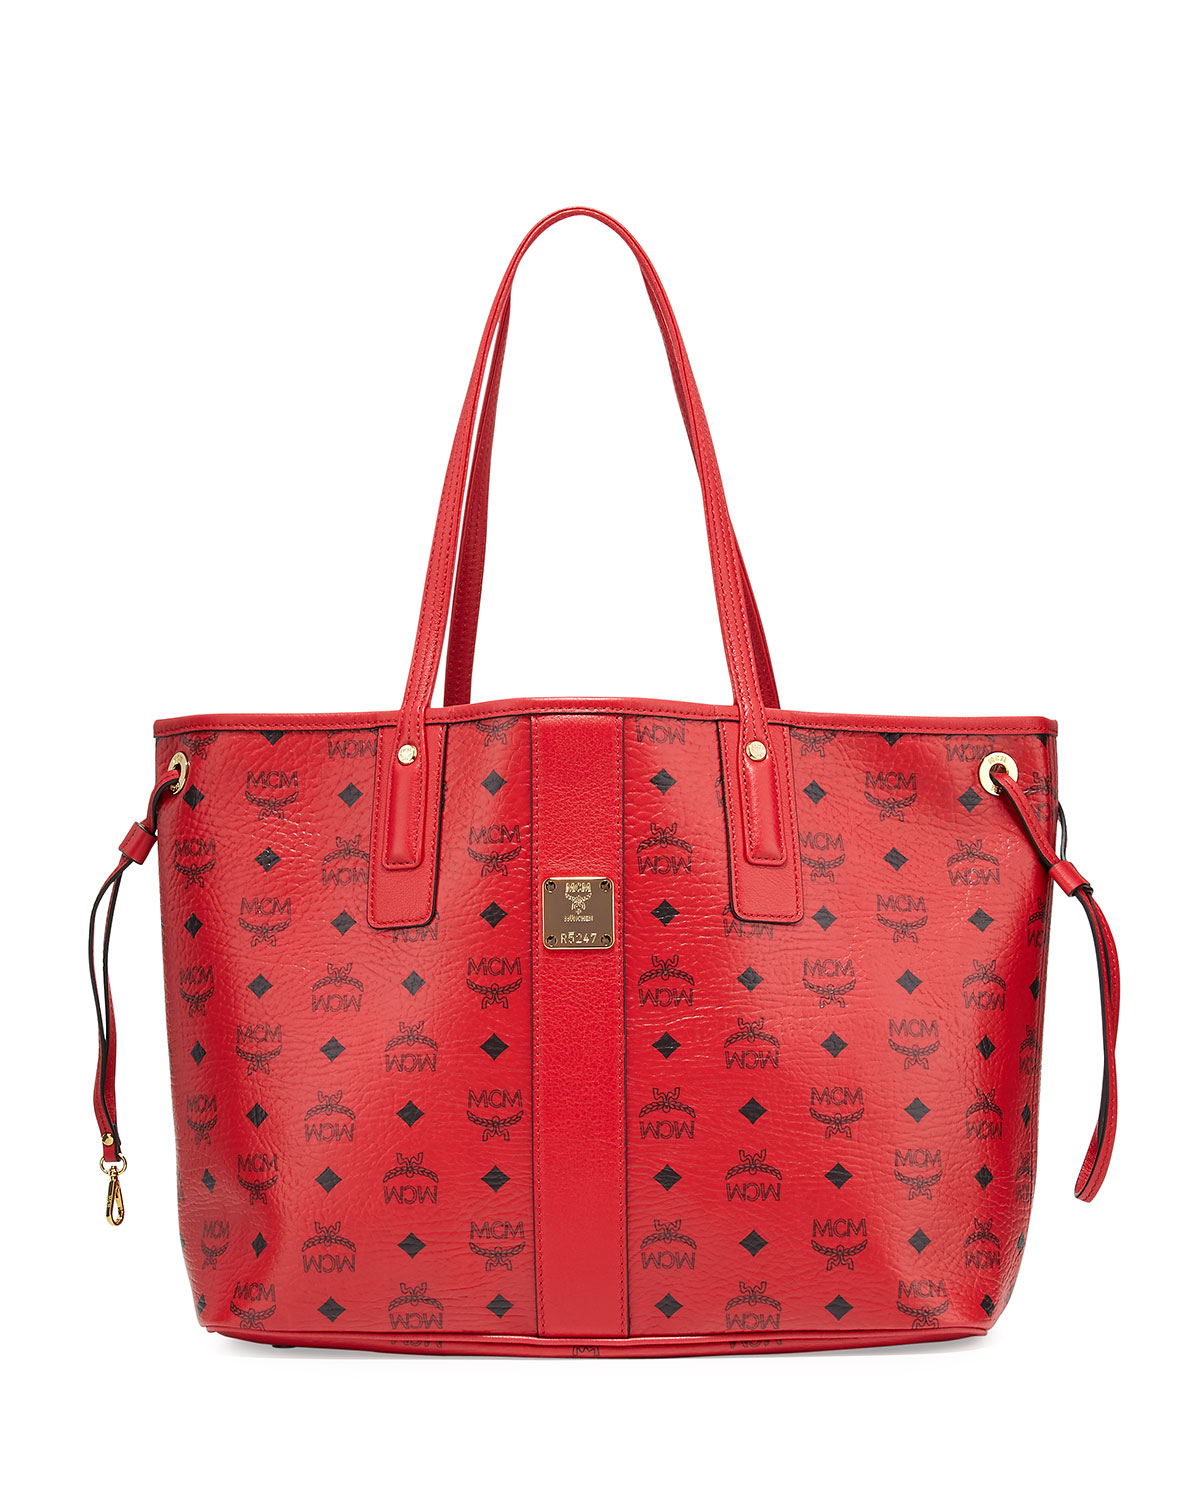 MCM Handbags for Sale - Bing1200 x 1500